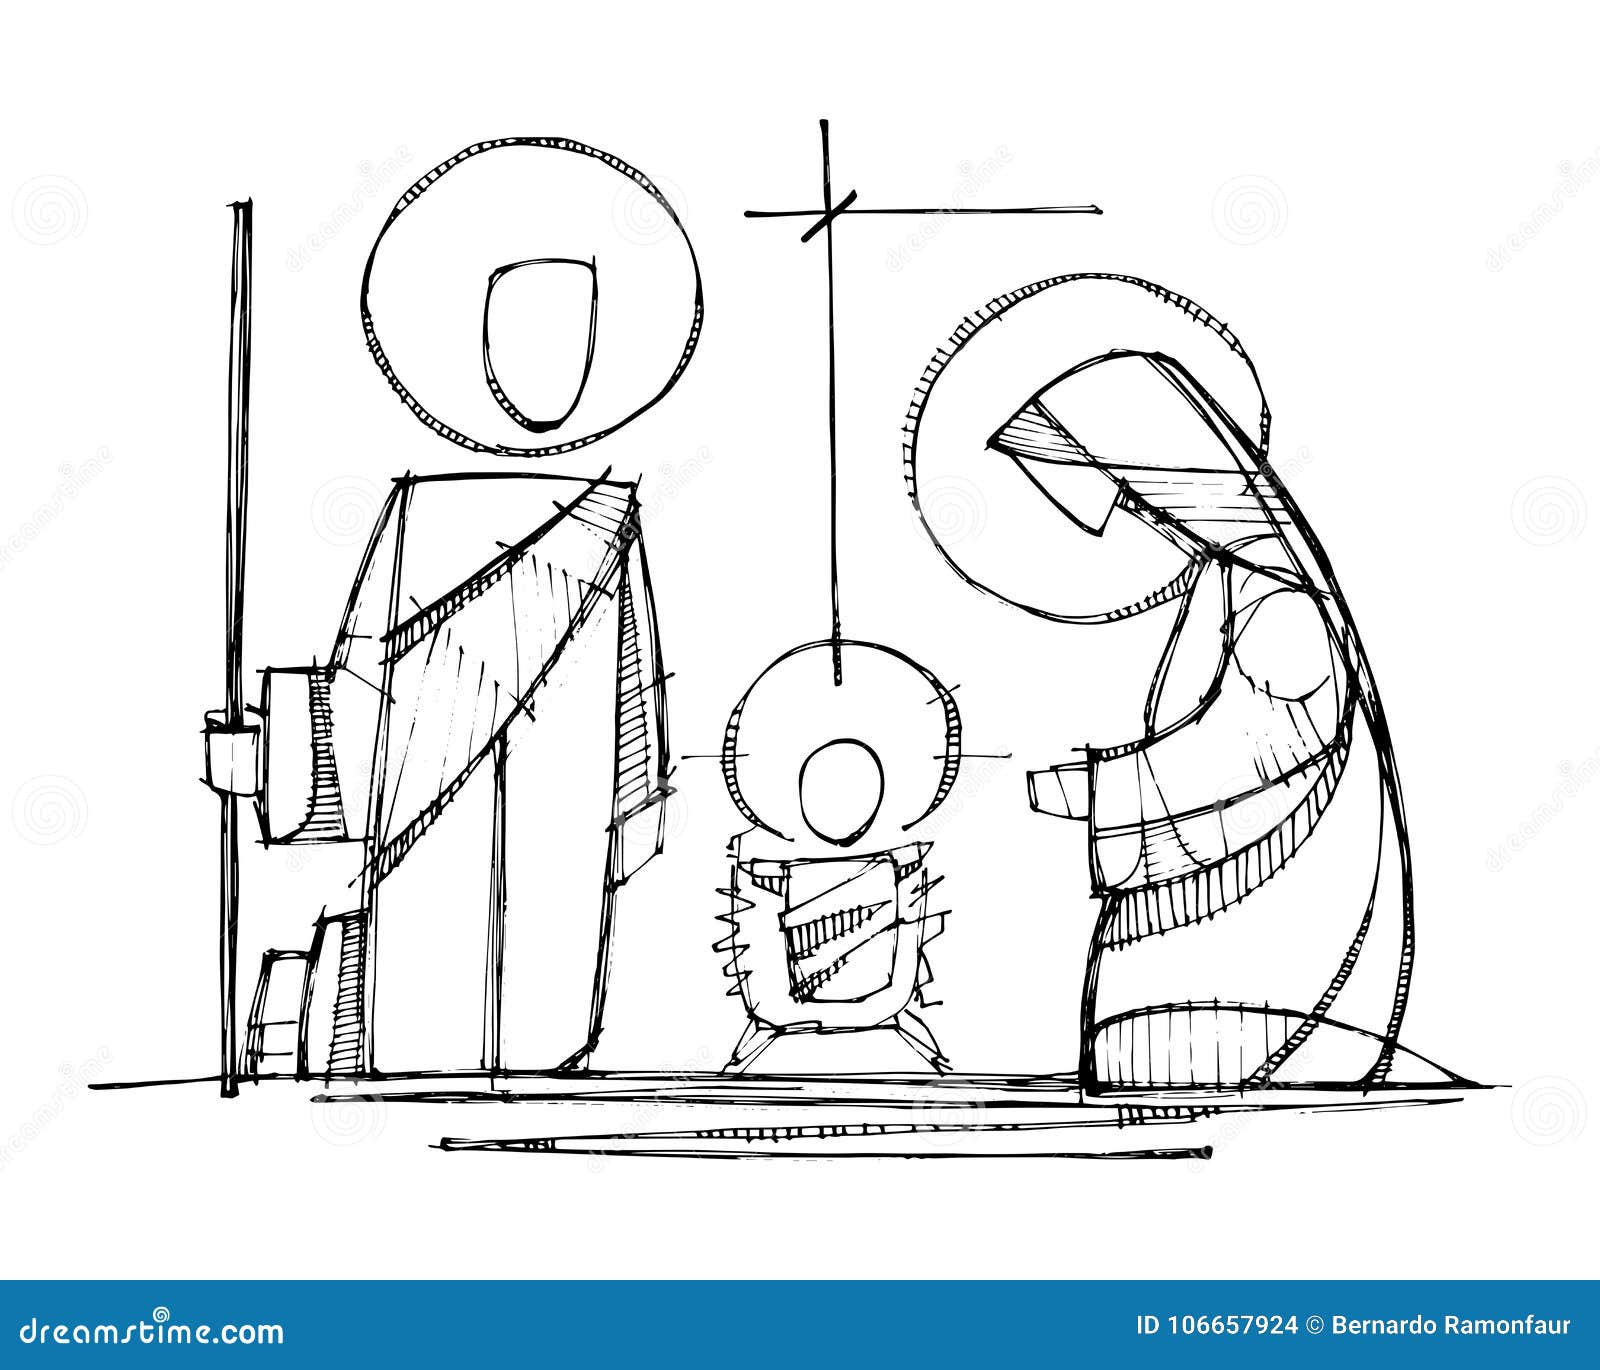 jesus, virgin mary and saint joseph at nativity